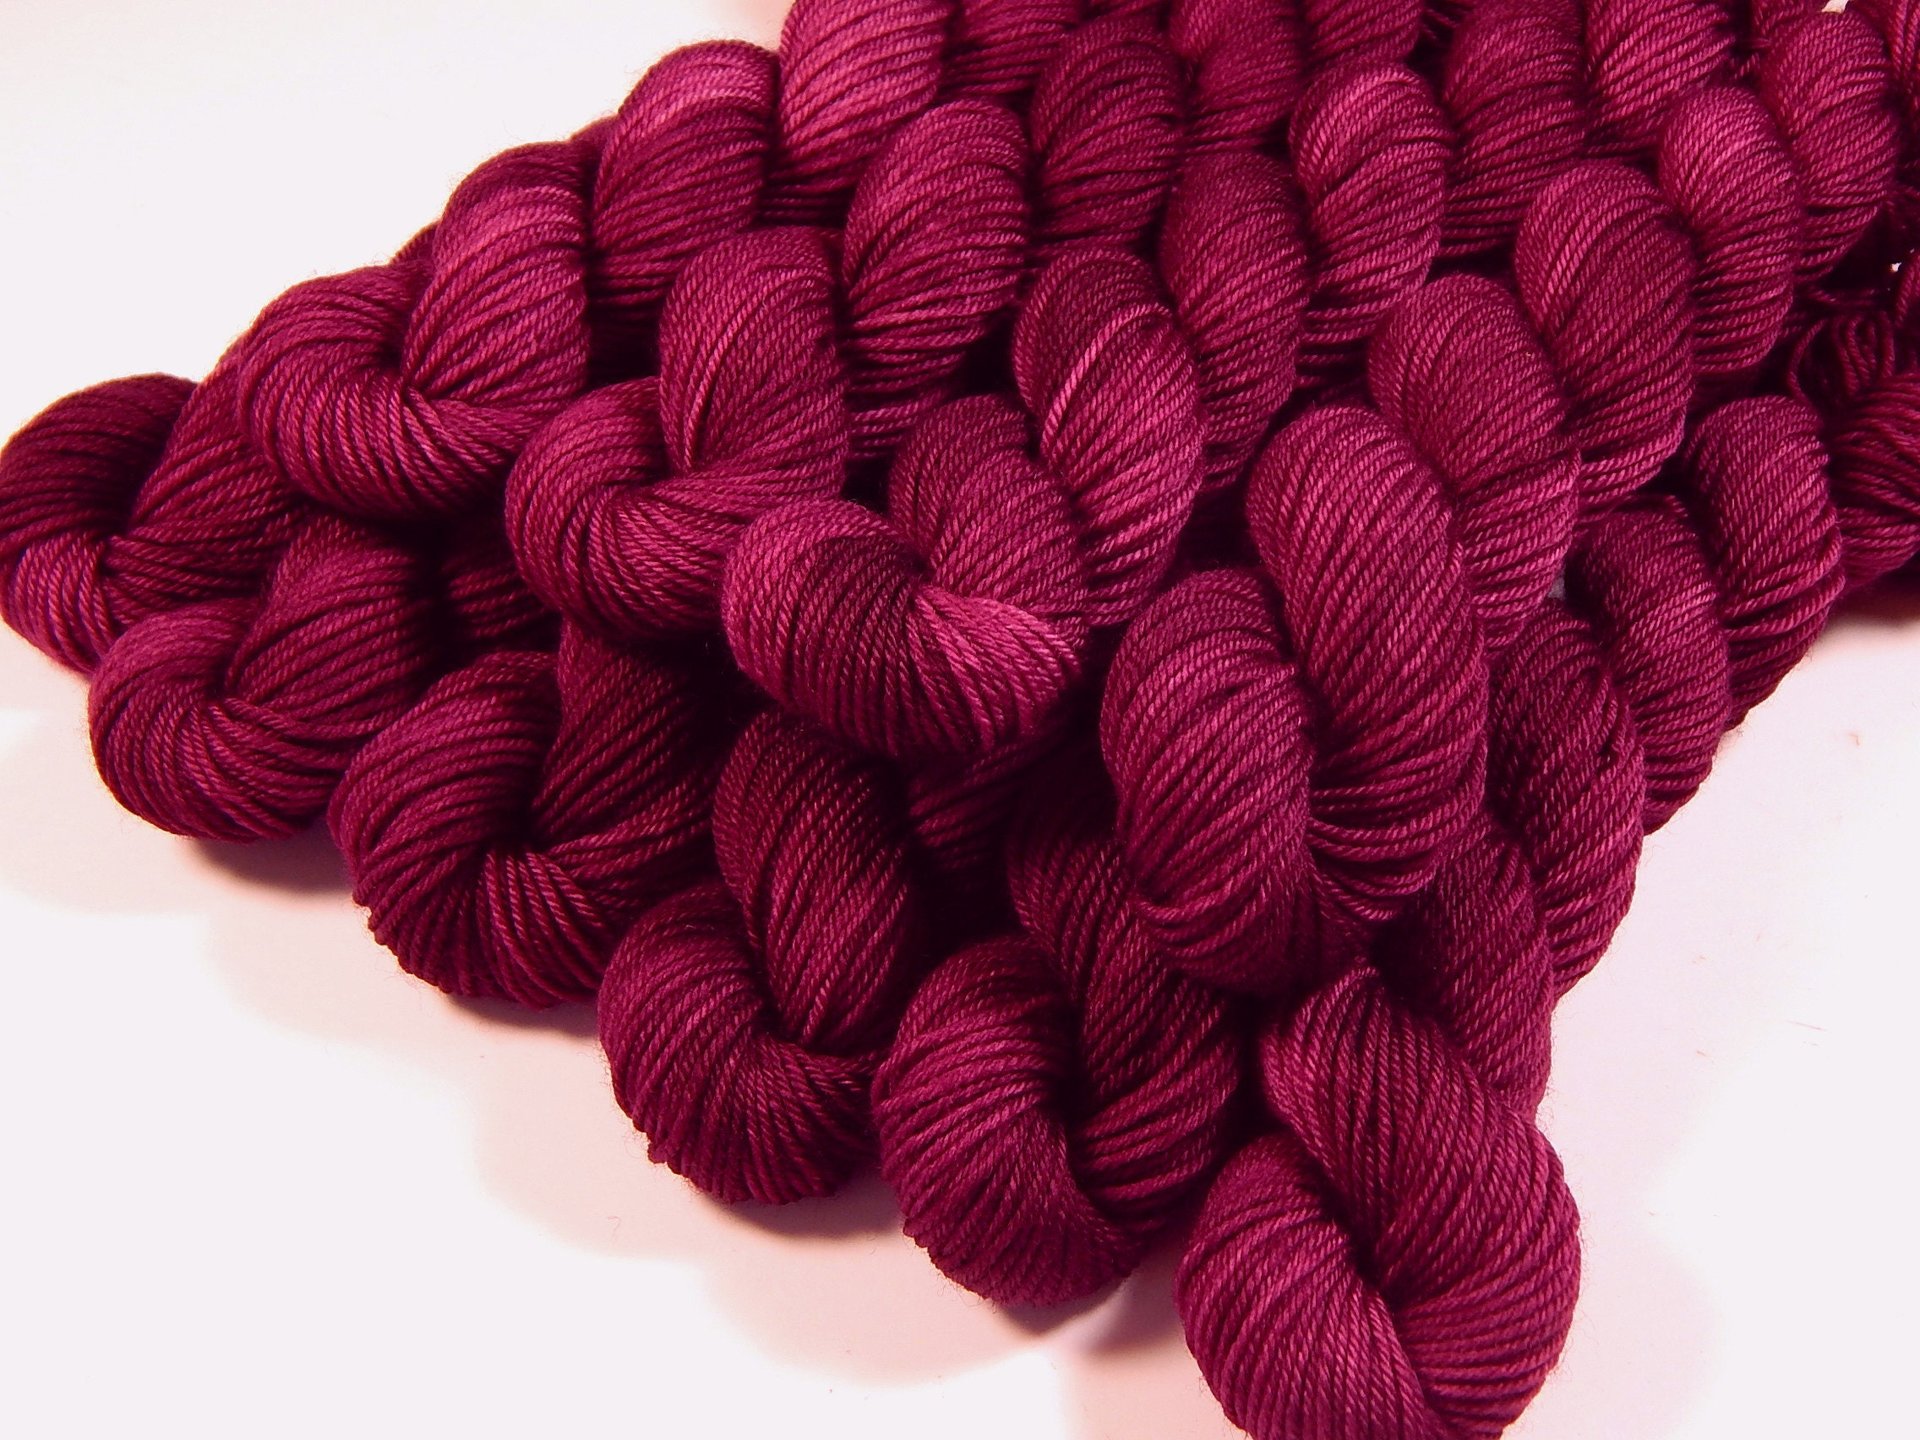 Sock Yarn Mini Skeins, Hand Dyed Yarn, Sock Weight 4 Ply Superwash Merino Wool - Plumberry - Tonal Red Violet, Indie Dyed Fingering Yarns